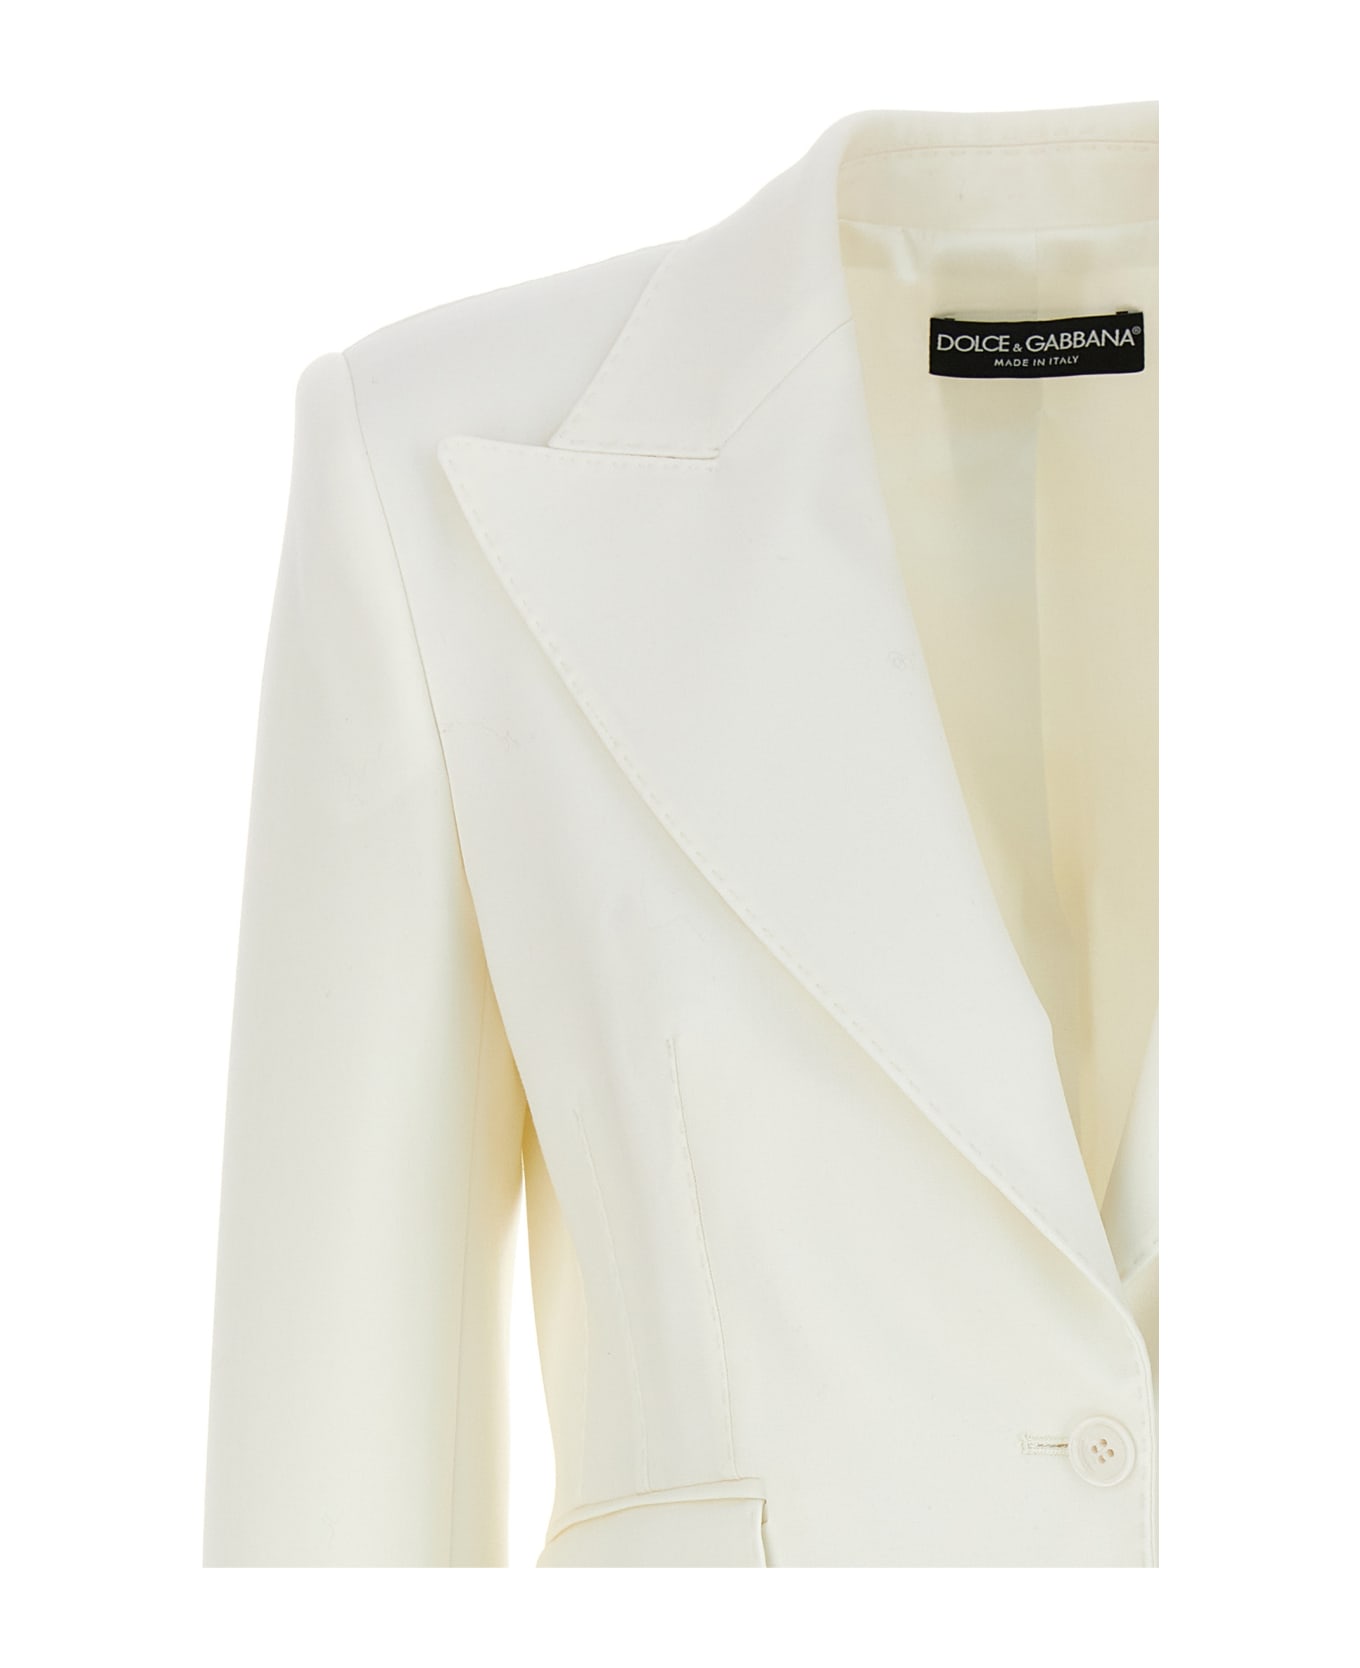 Dolce & Gabbana Turlington Blazer - WHITE